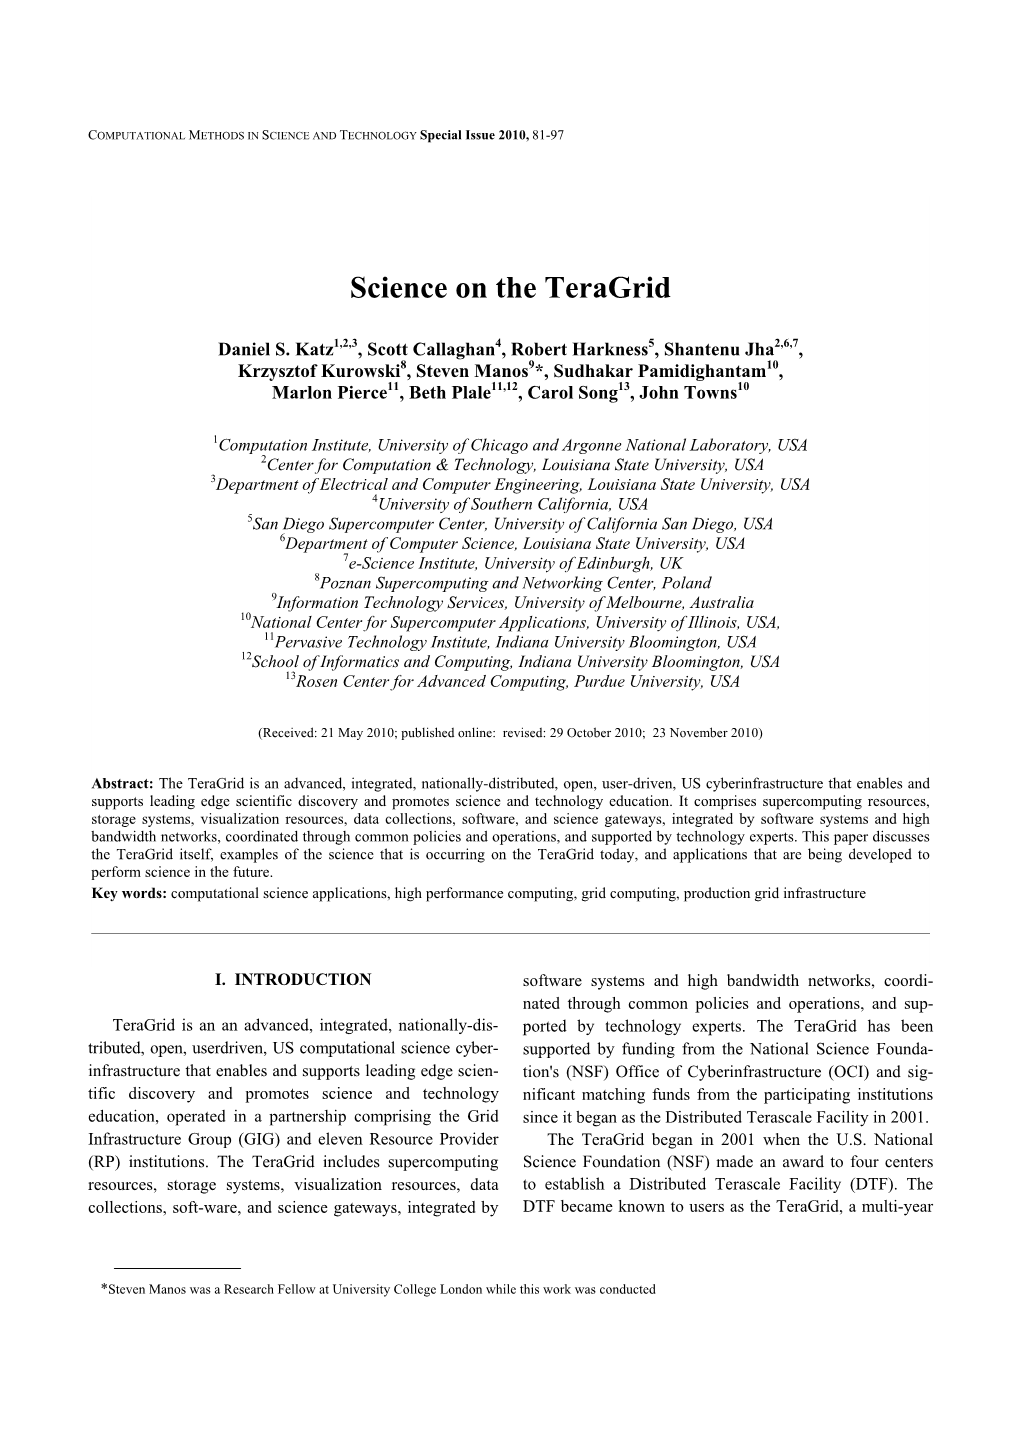 Science on the Teragrid